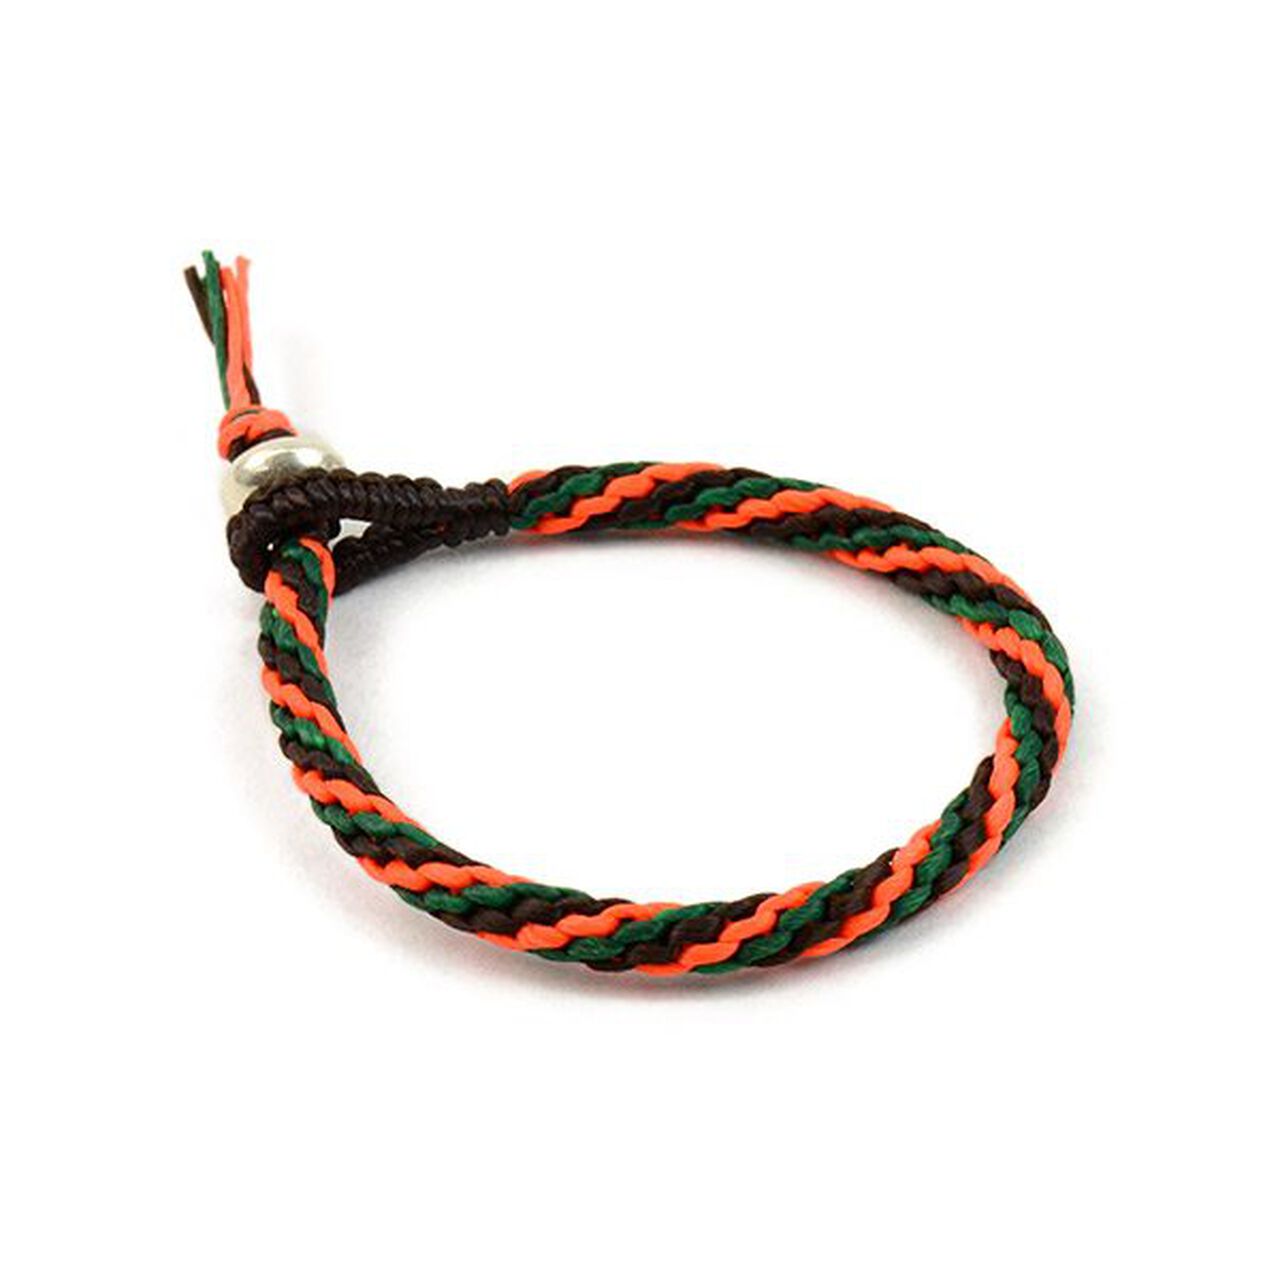 Spiral Coloured Braid Wax Cord Bracelet,Brown_Green_Orange, large image number 0